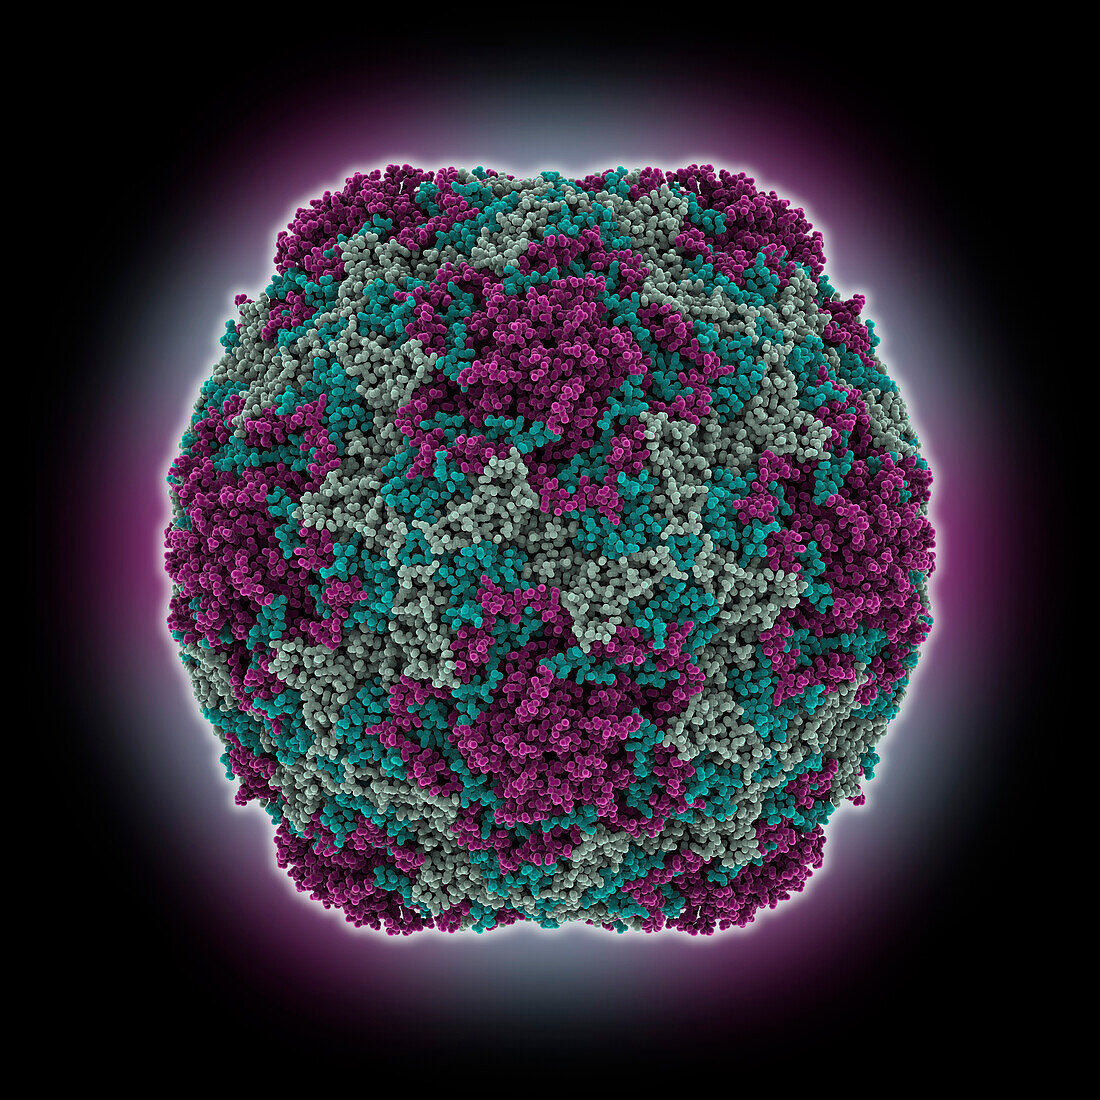 Human enterovirus D68 capsid, molecular model